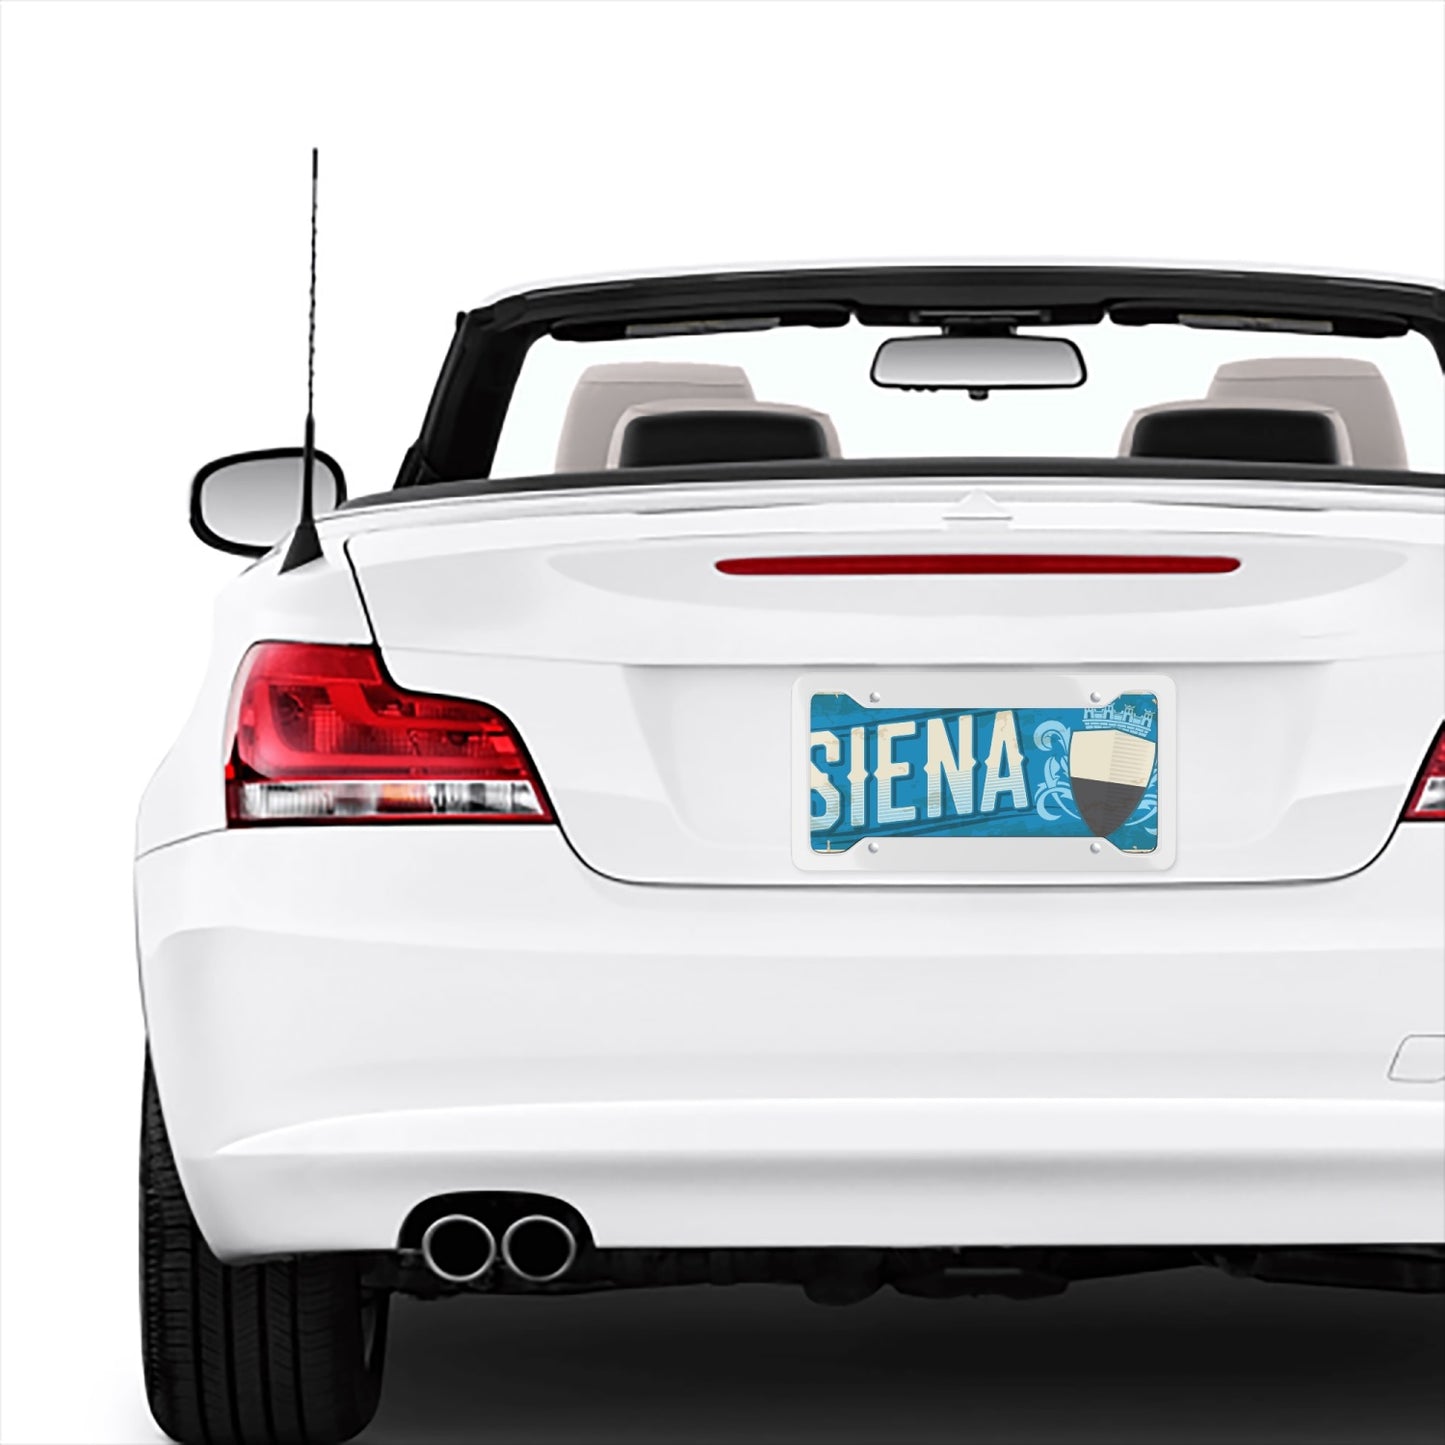 Siena License Plate Italian Style